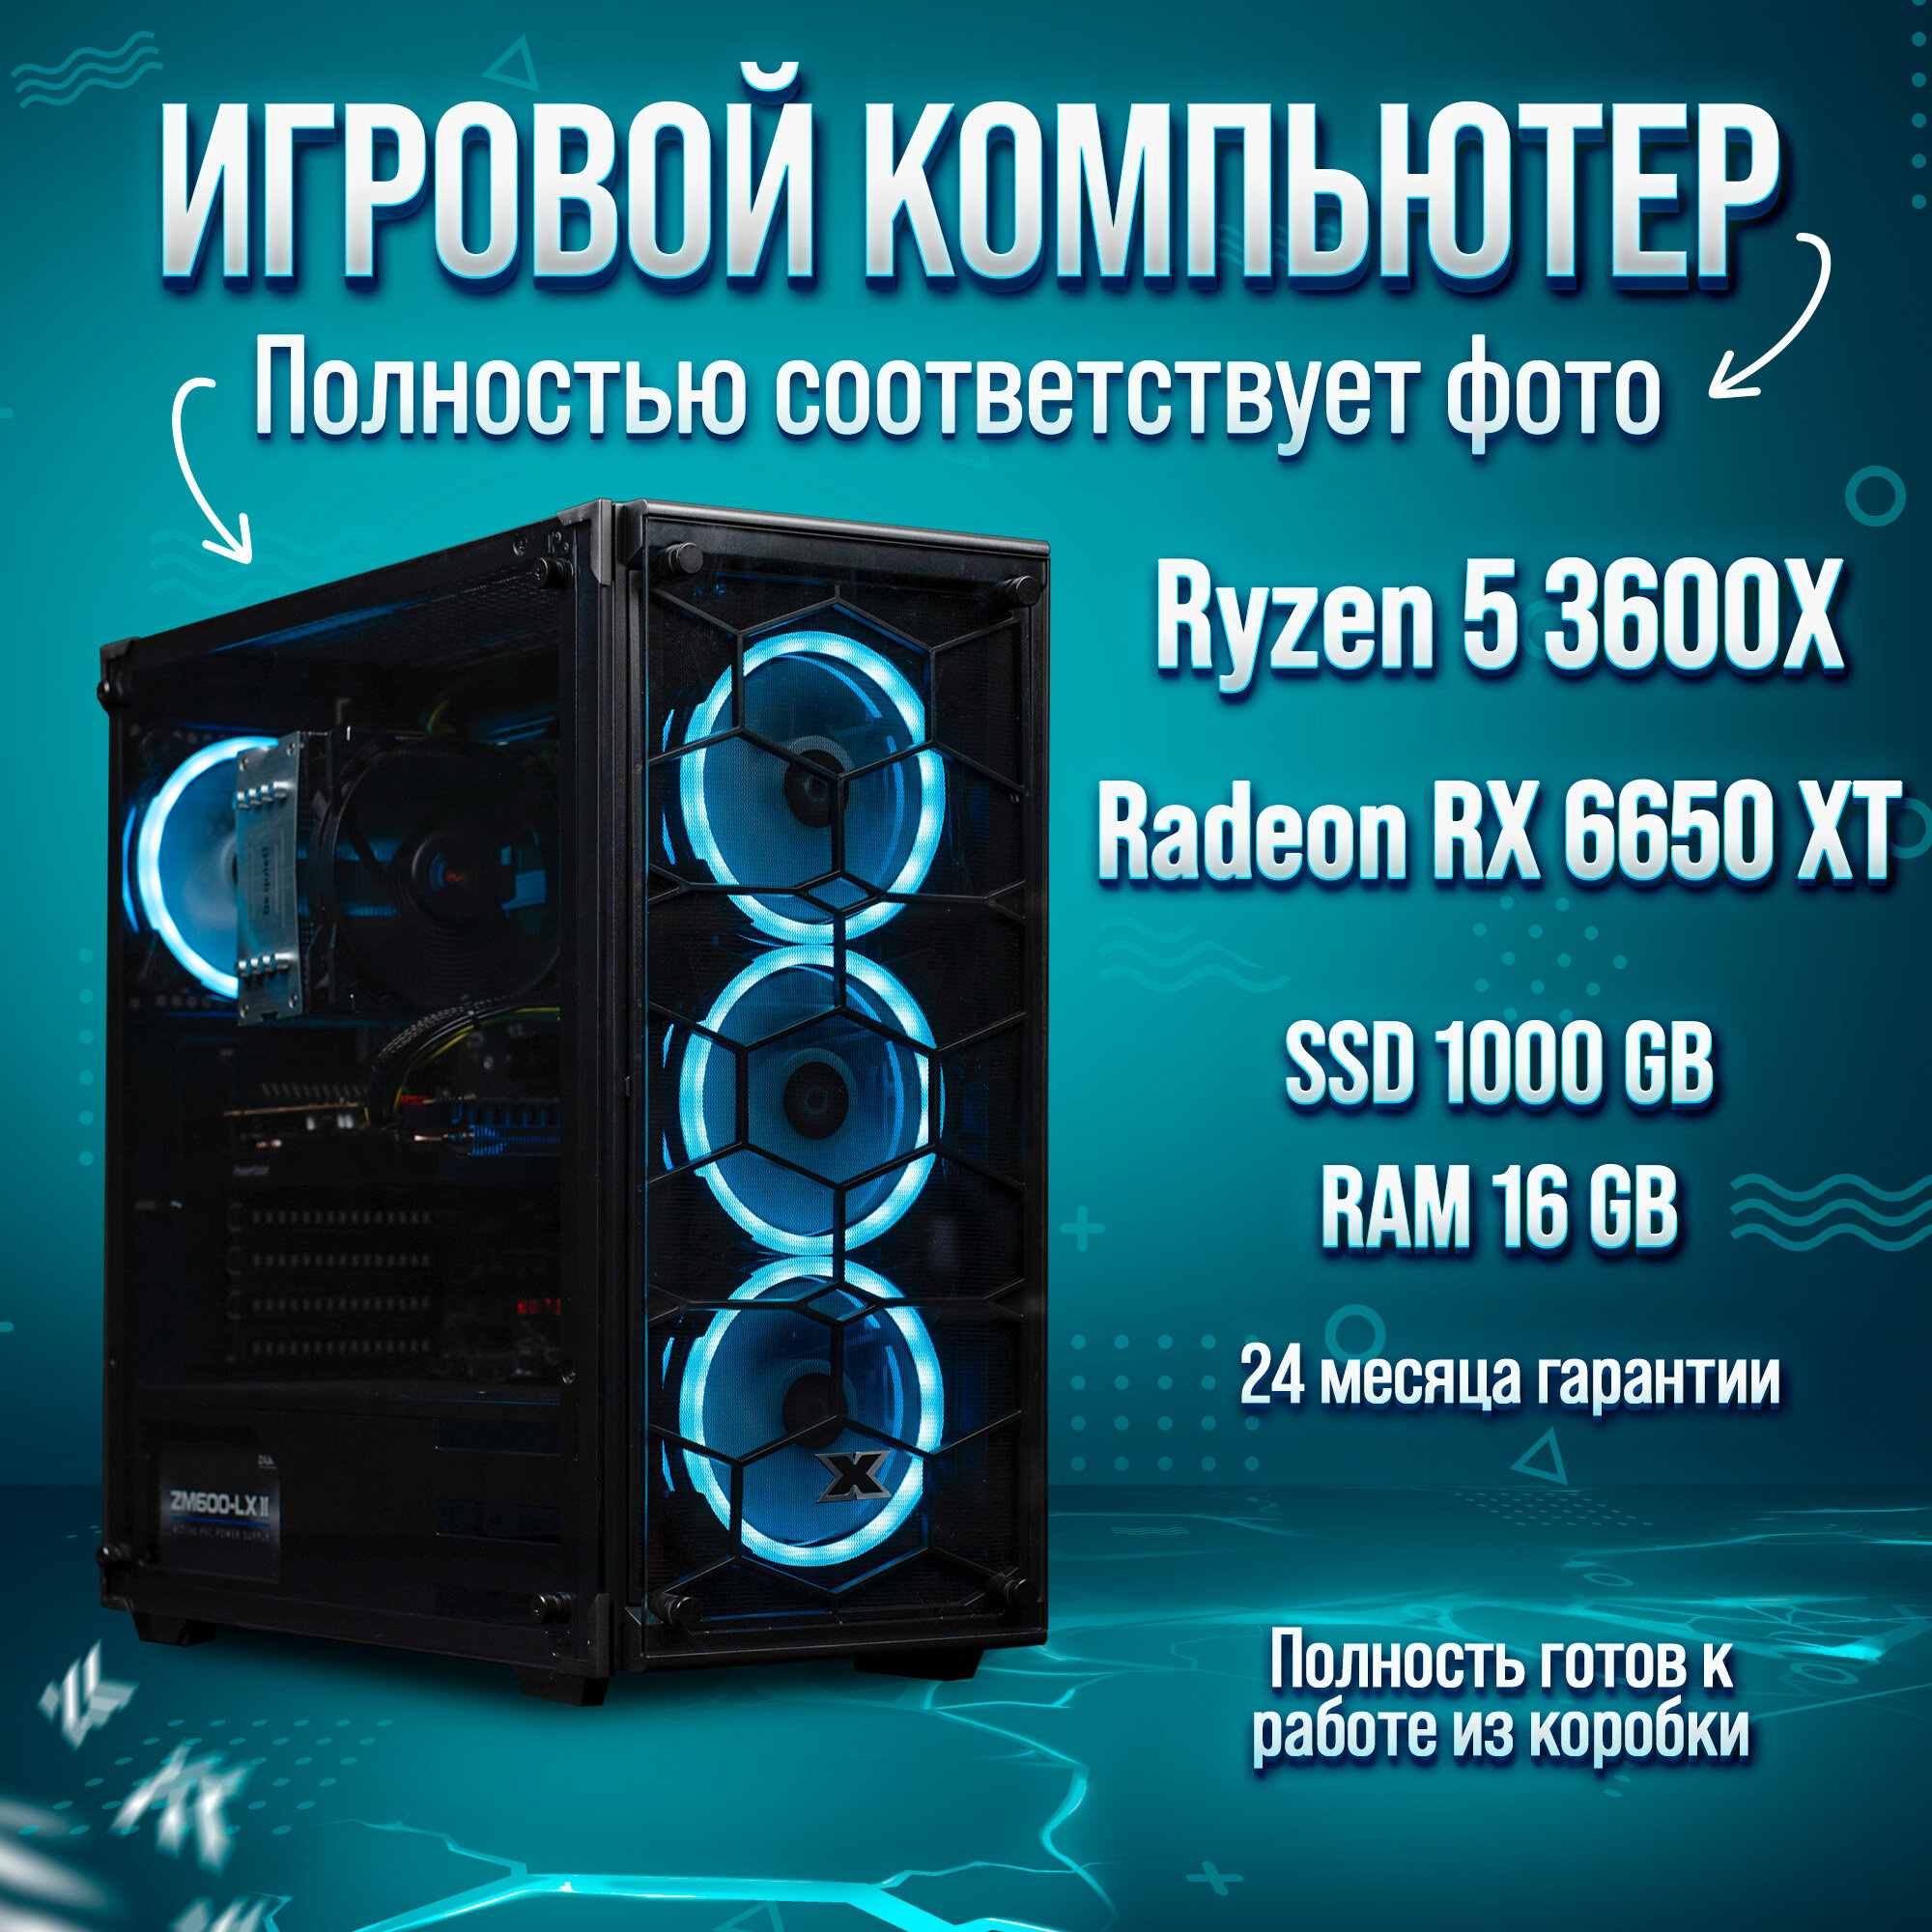 Игровой компьютер King Komp AMD Ryzen 5 3600X RX 6650 XT 8GB DDR4 16GB SSD 1000GB